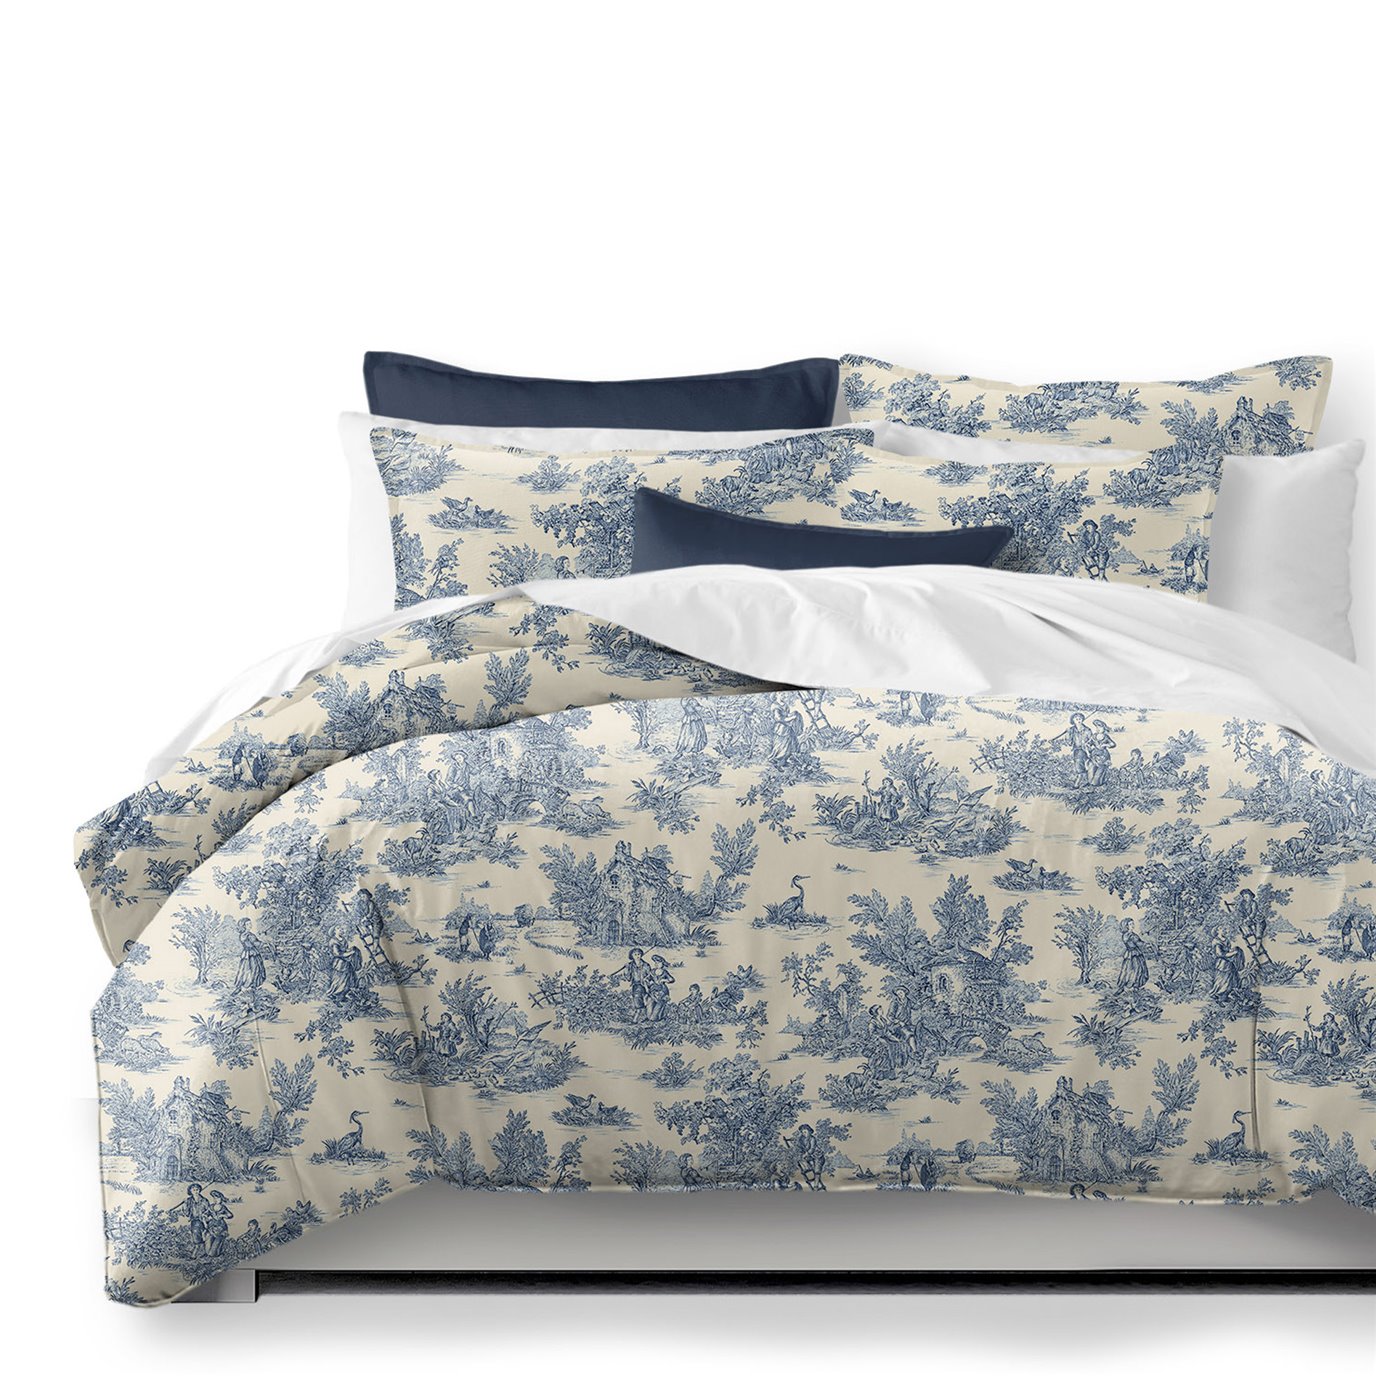 Bouclair Blue Comforter and Pillow Sham(s) Set - Size Full